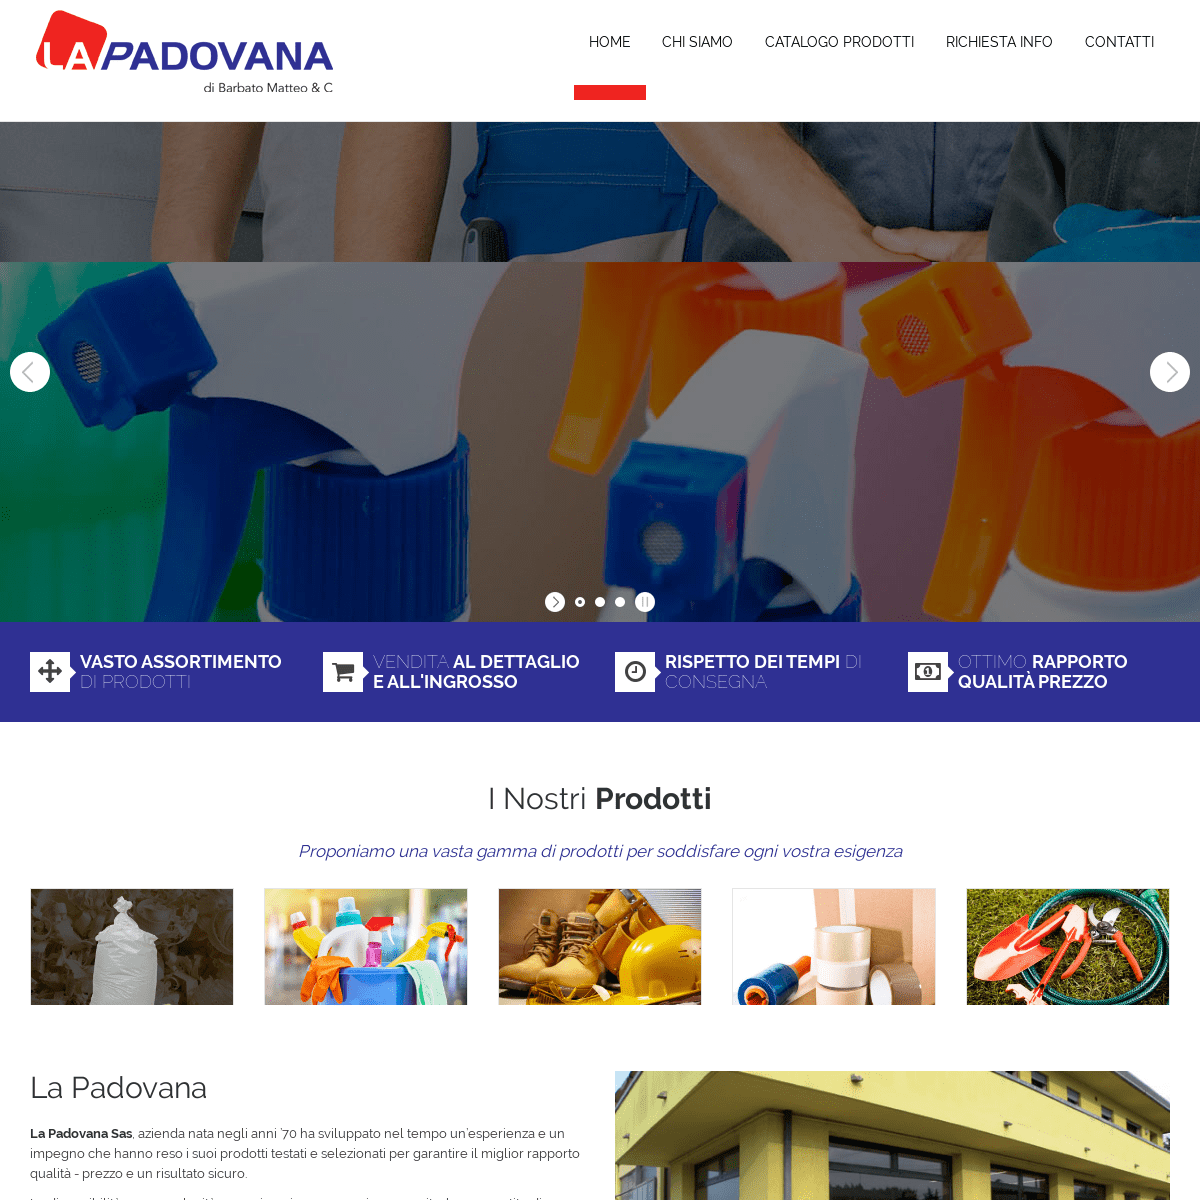 A complete backup of lapadovana.com